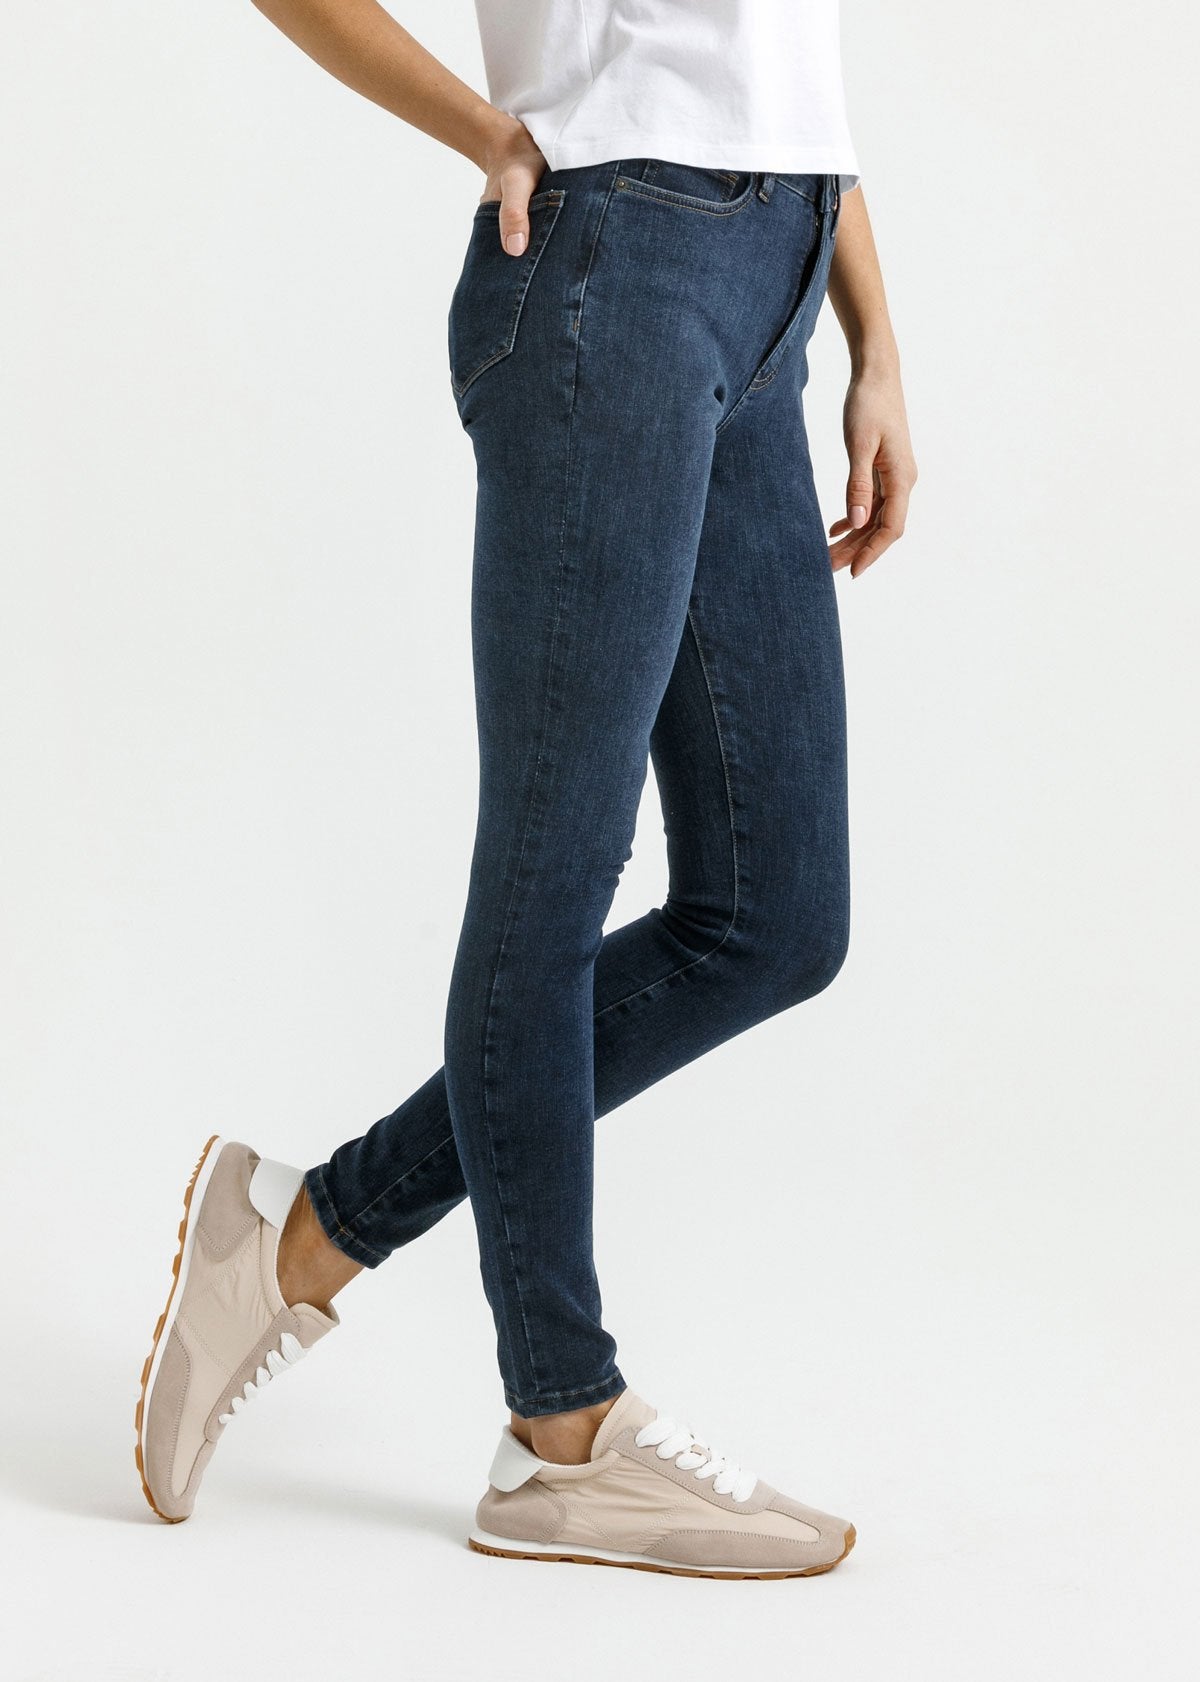 Comfertable back side Elastic Jeans